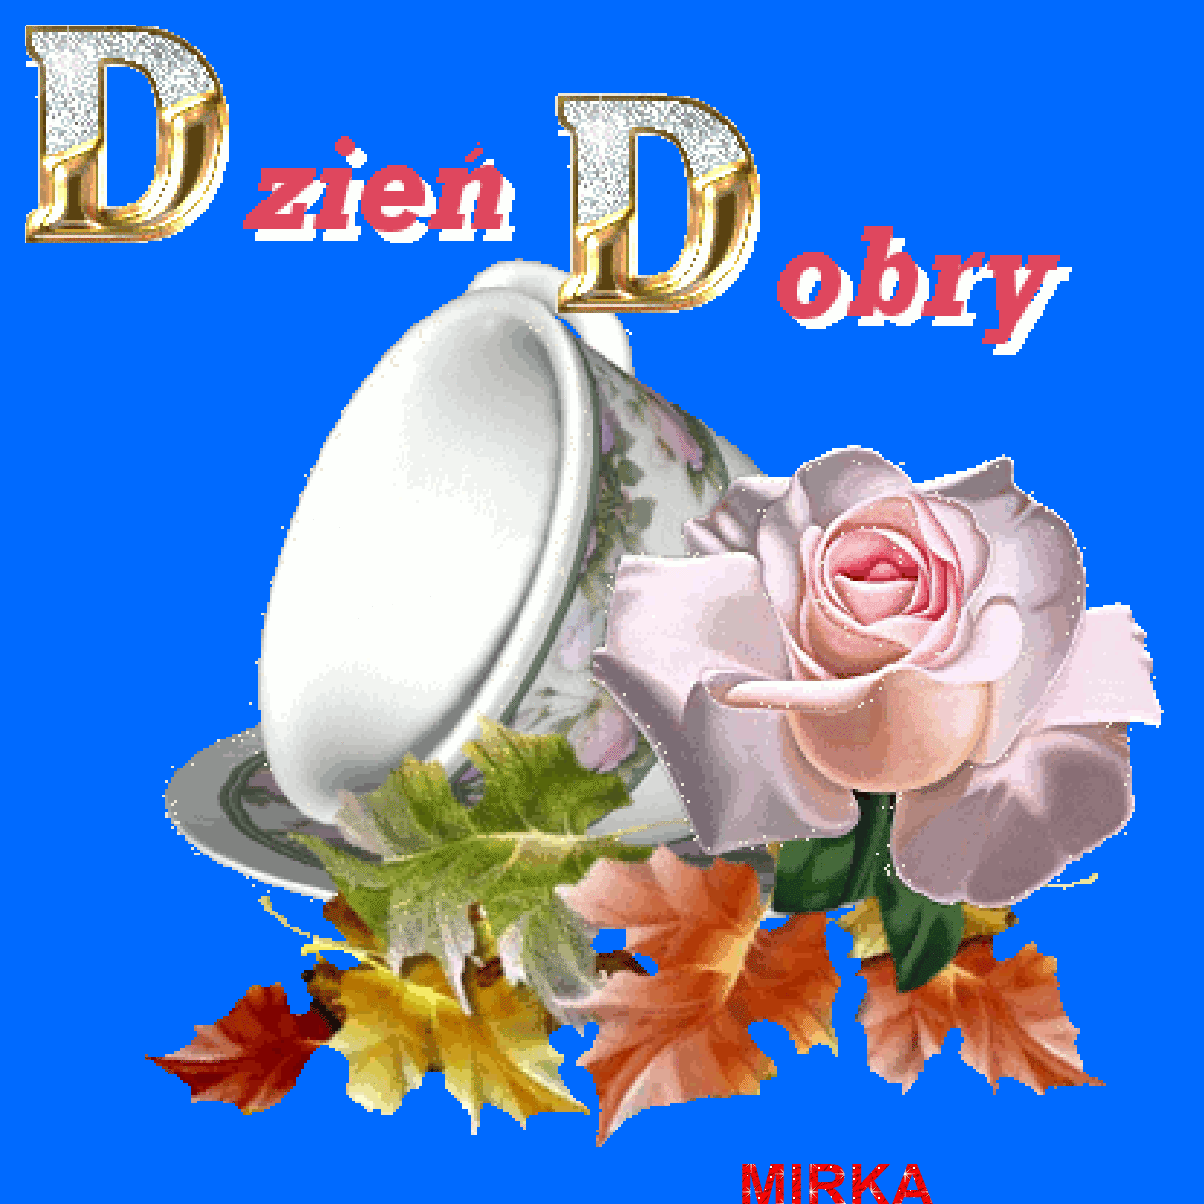 dzien-dobry-gify-95